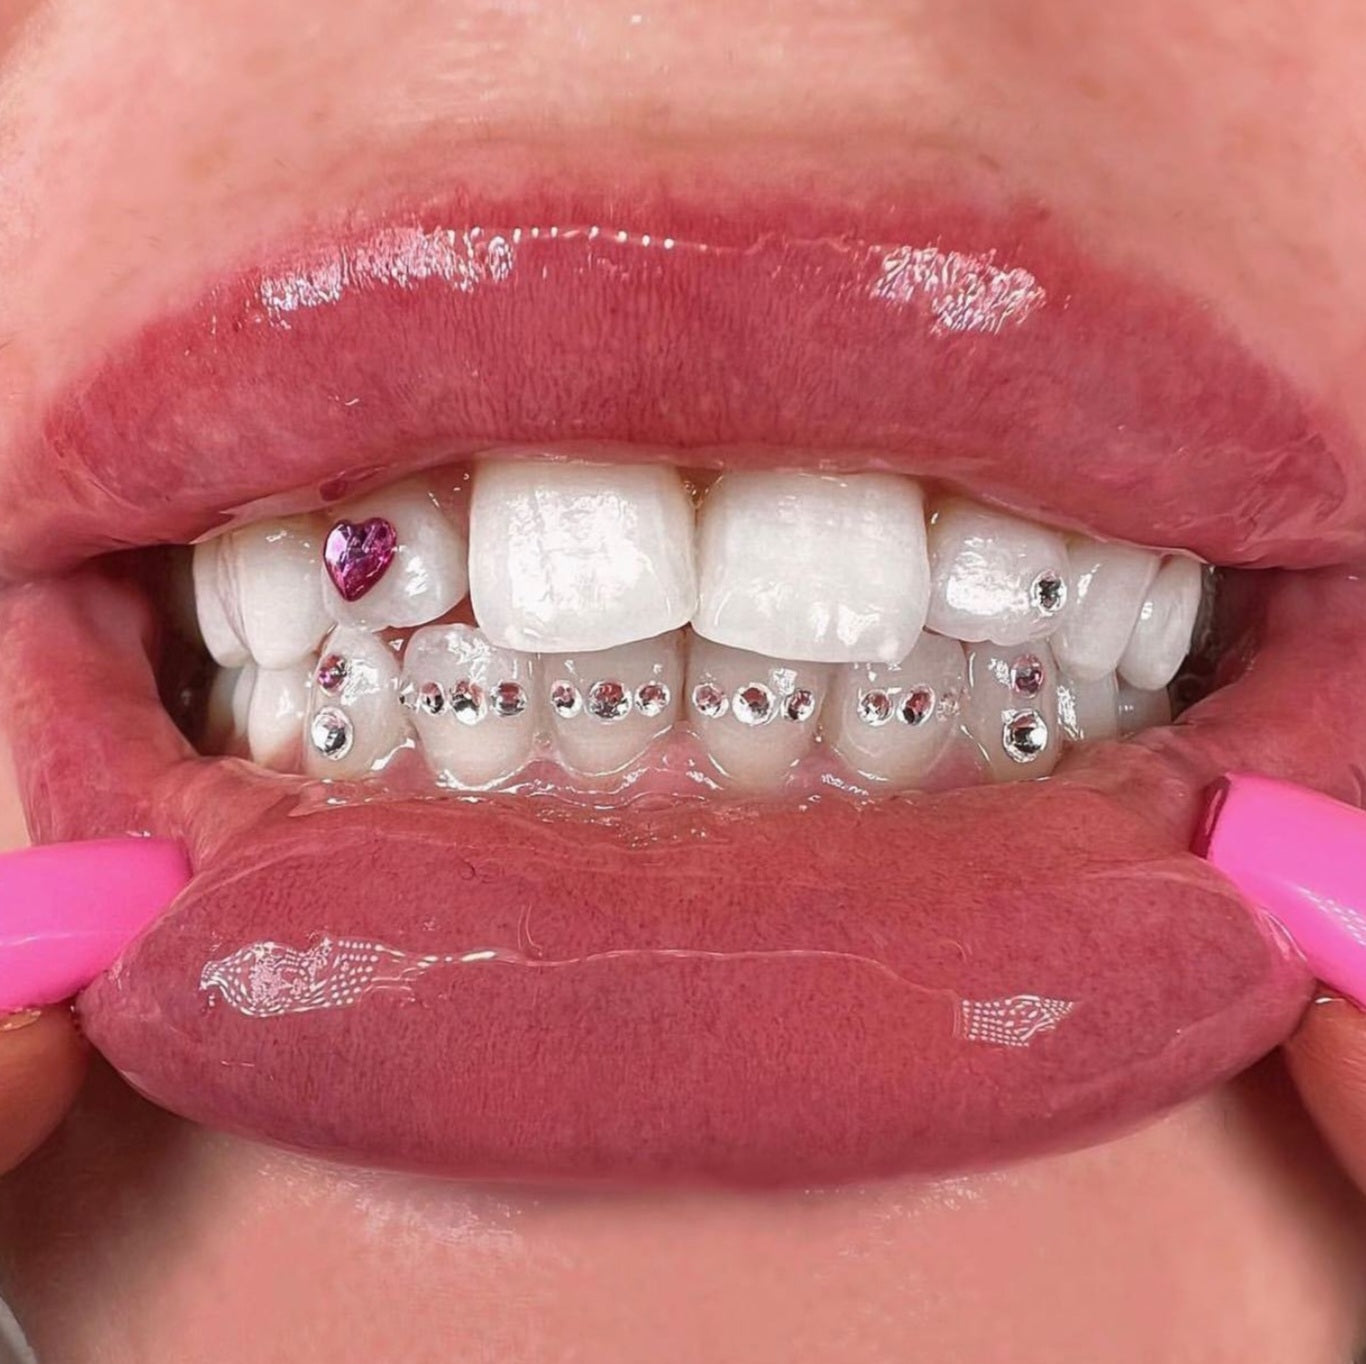 Danbook DIY Tooth Gem Kit DIY Teeth Jewelry Starter Kit with Glue and Light for Girls Women, Girl's